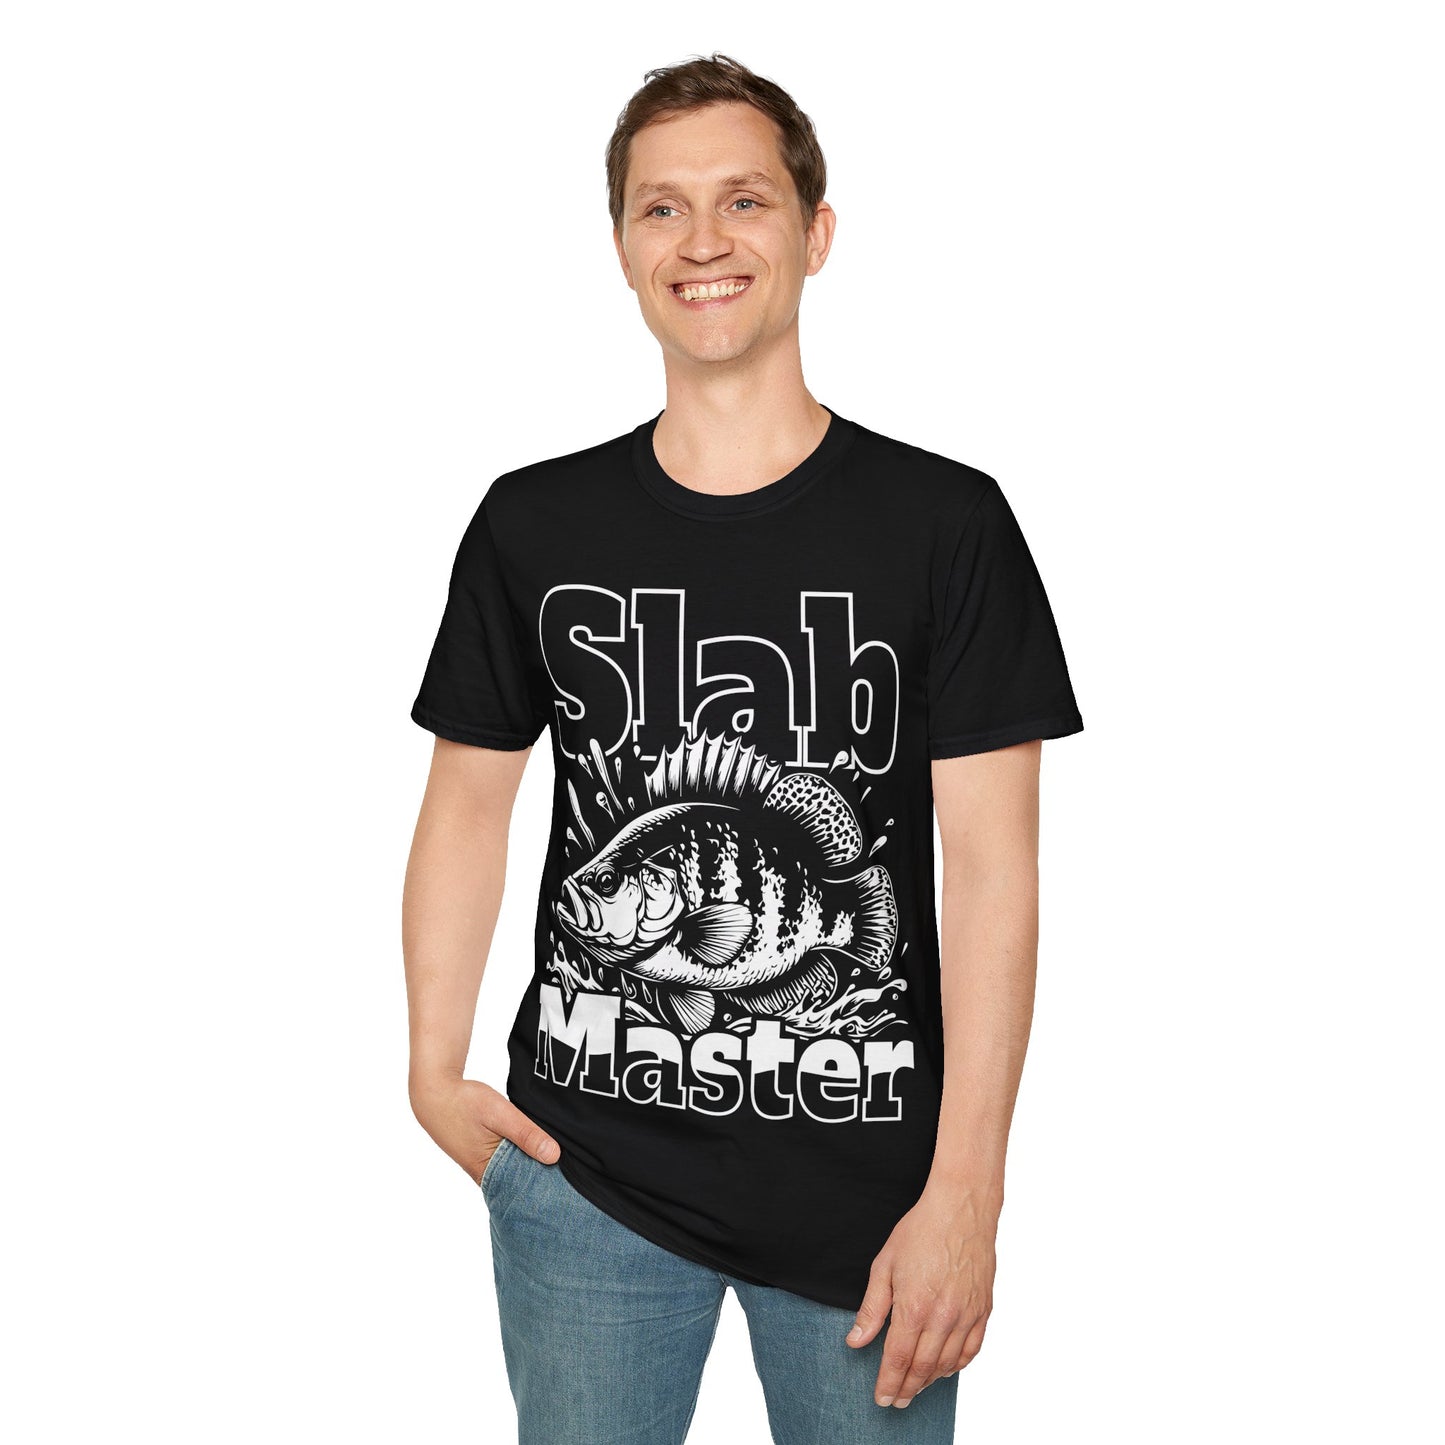 Slab Master Crappie Fishing T-Shirt